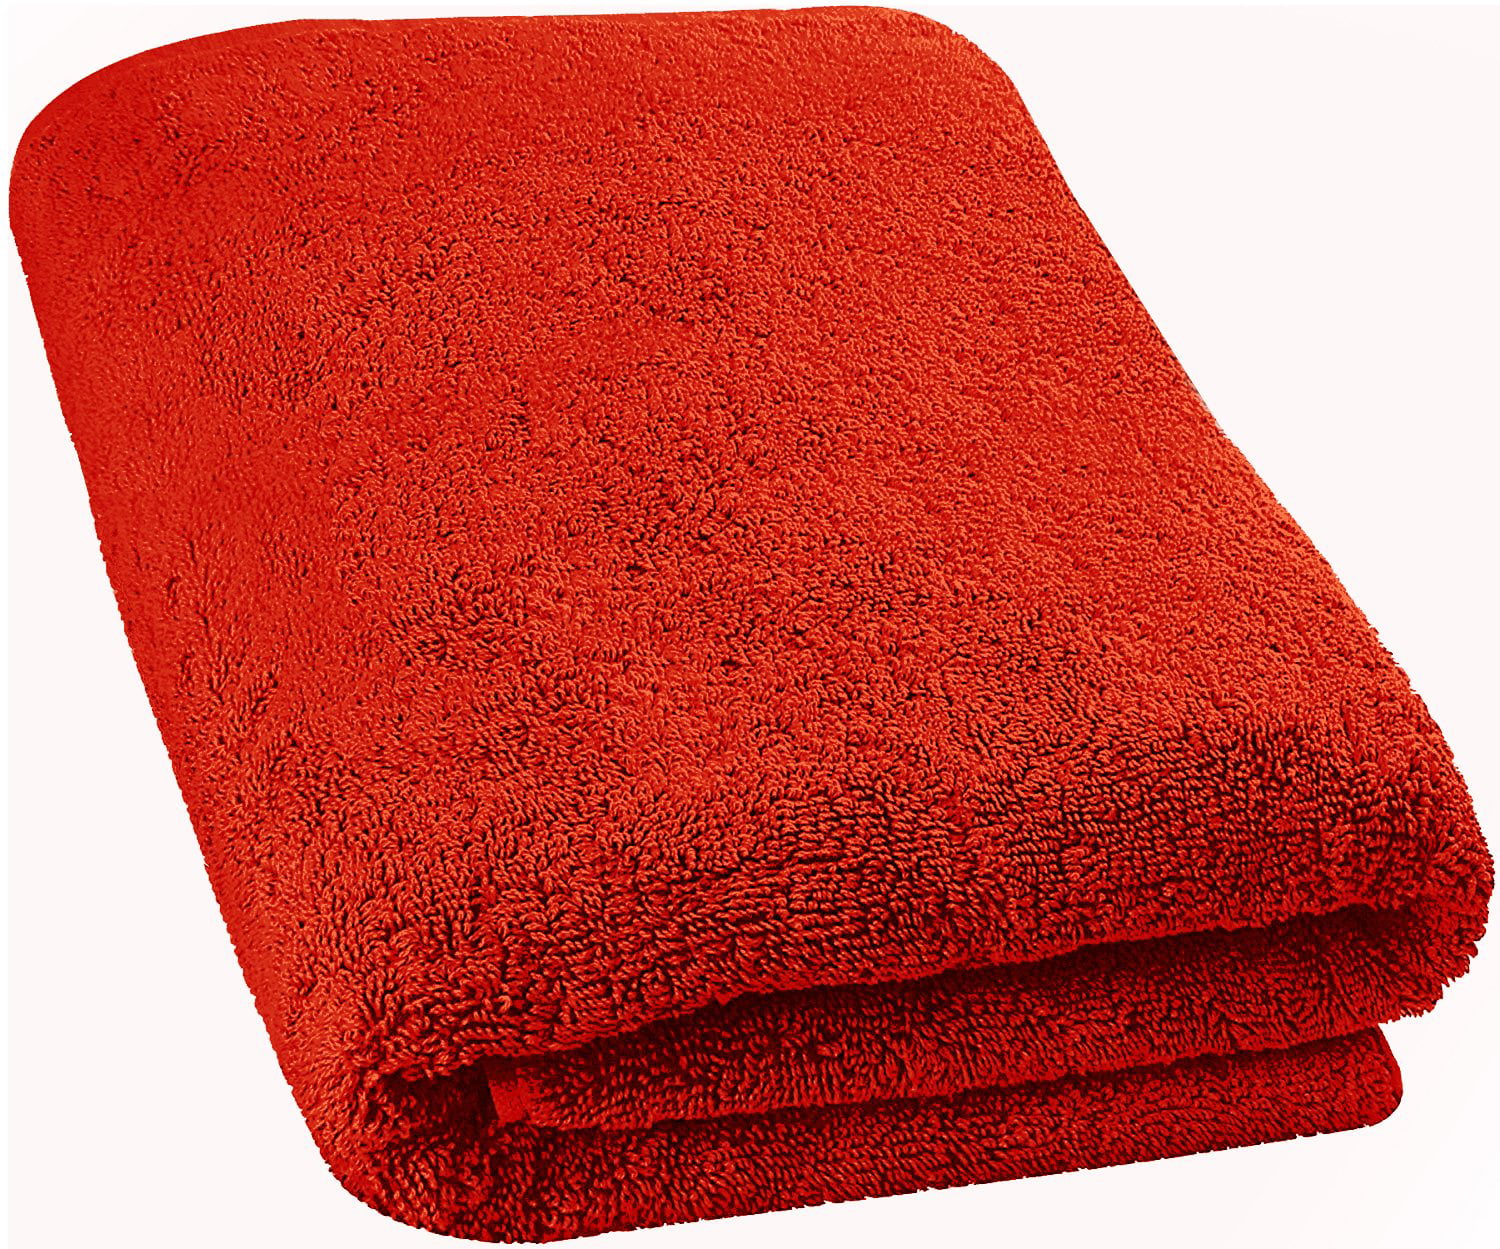 Details about   Soft Bath Towel Luxury Towels for Bathroom Softness & Absorbent Bath Sheet